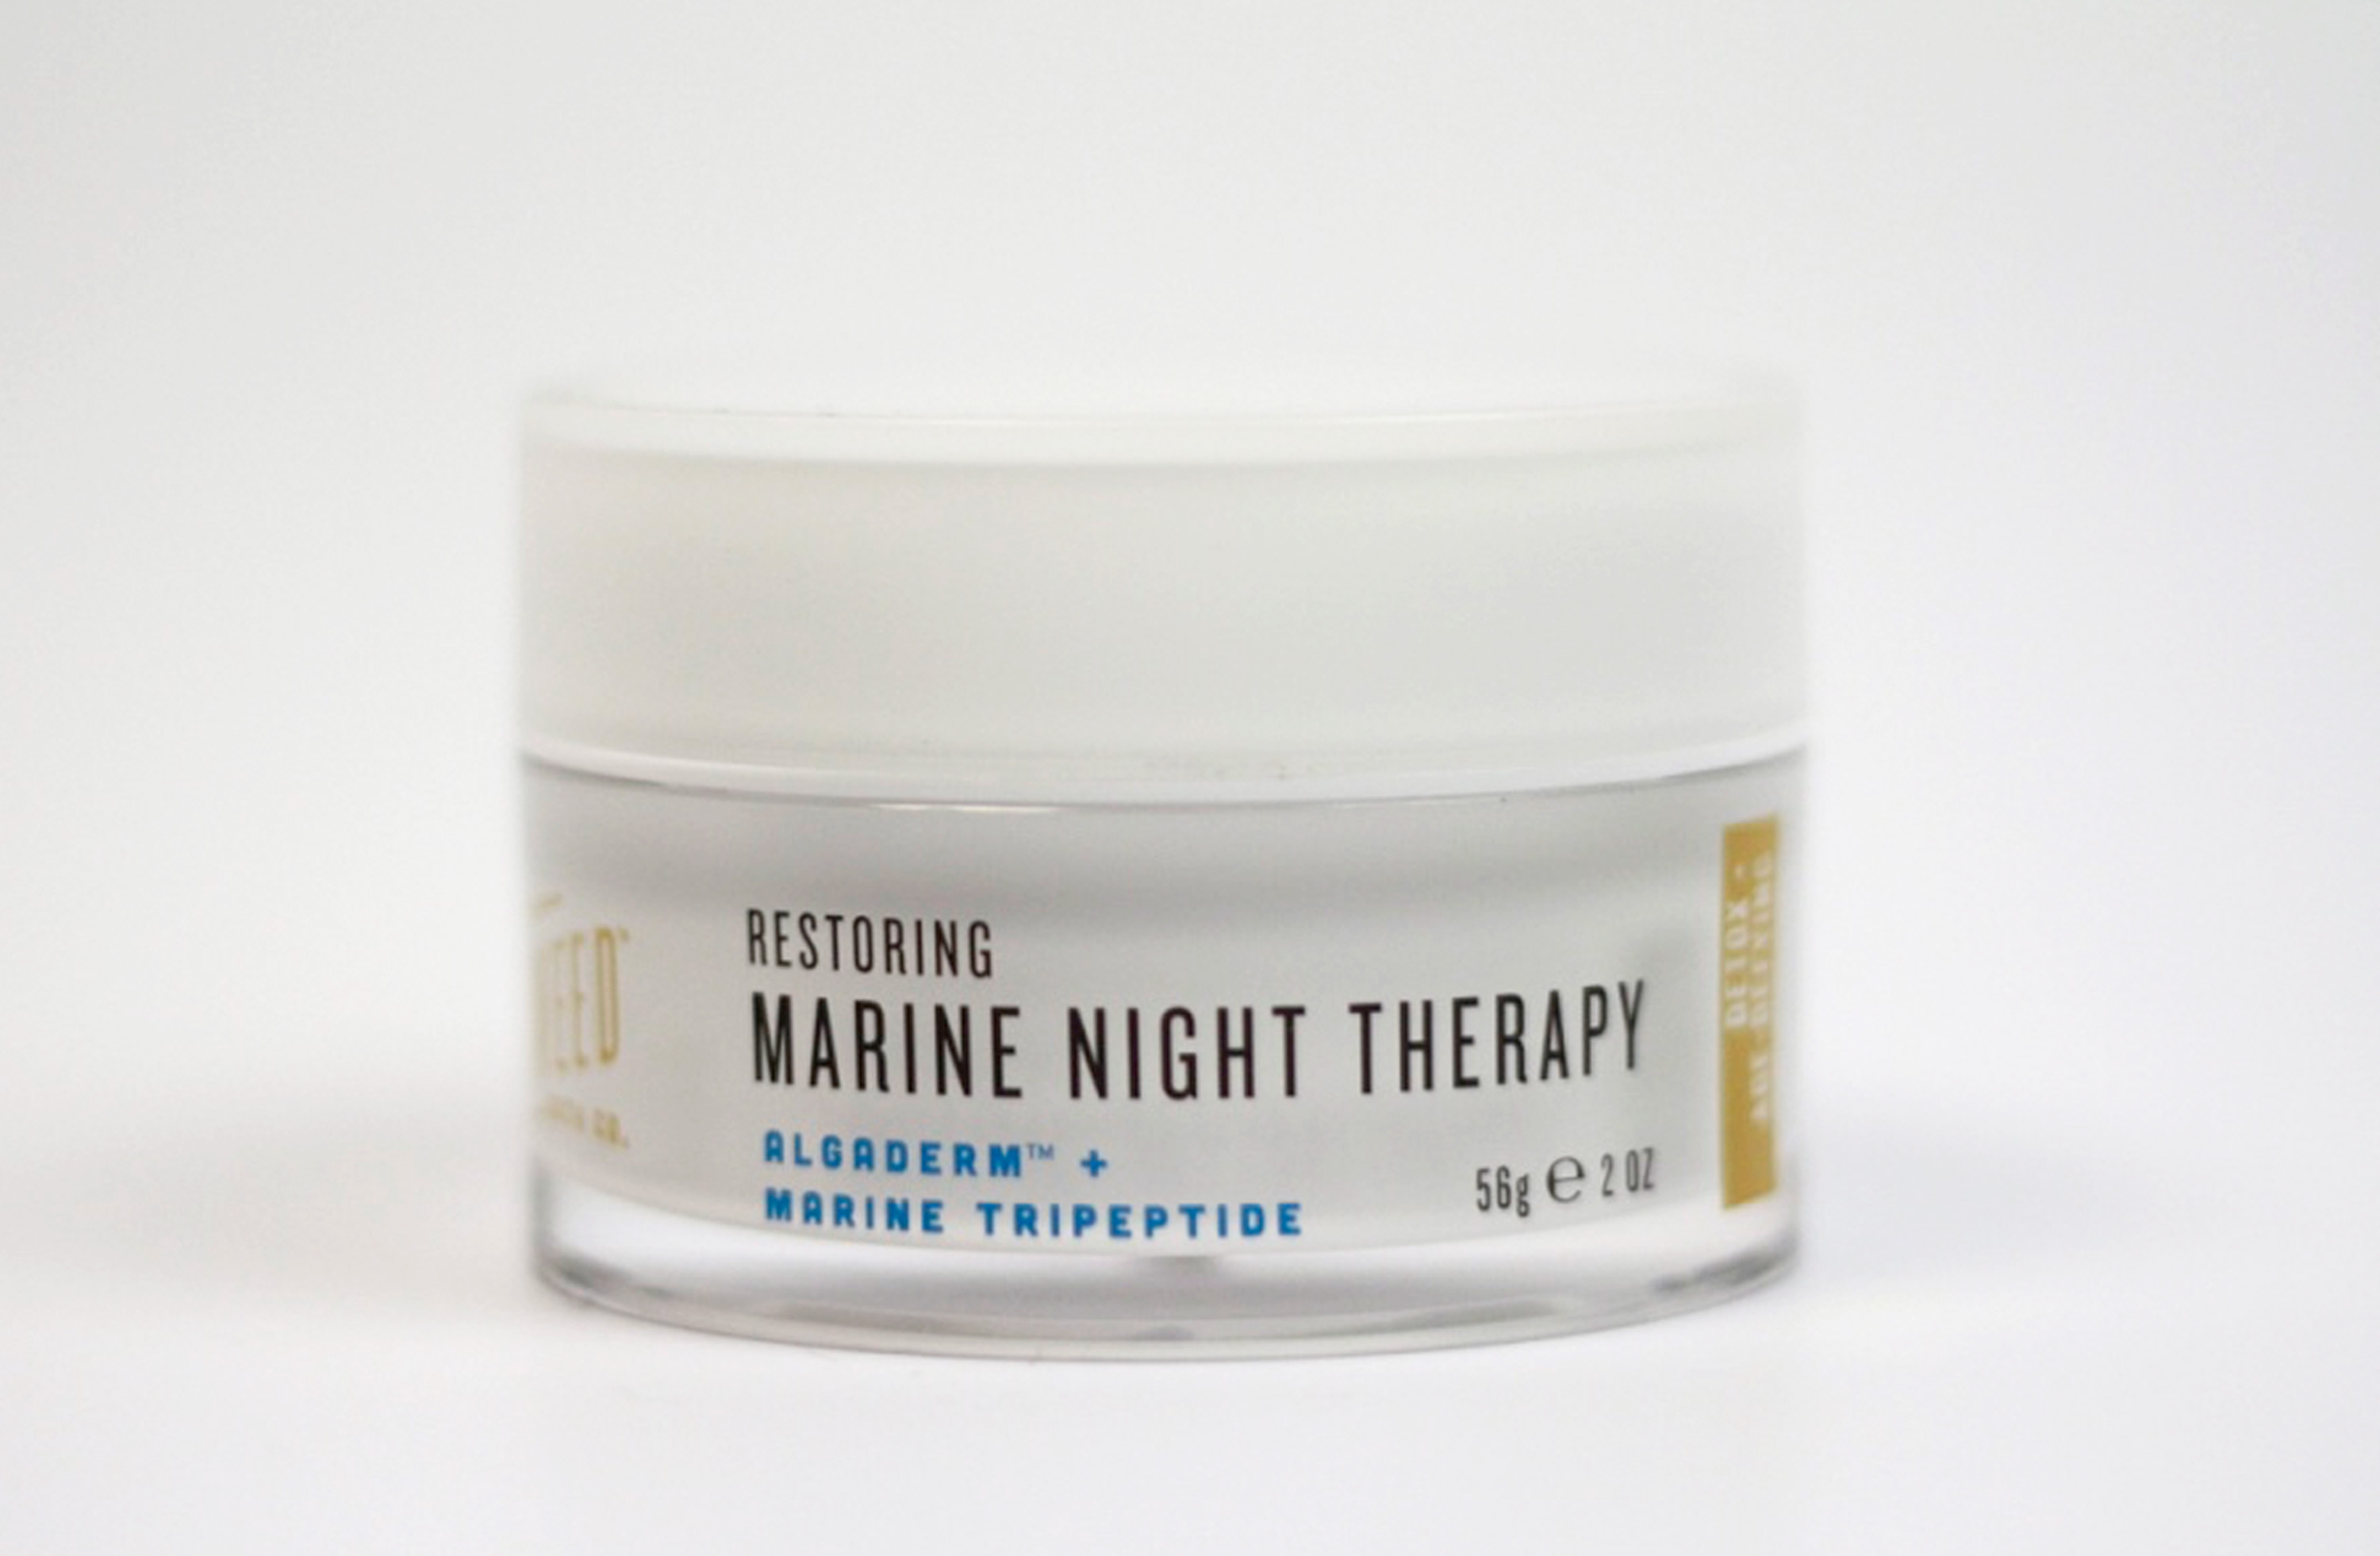 The Seaweed Bath Co. Detox + Age-Defying Restoring Marine Night Therapy